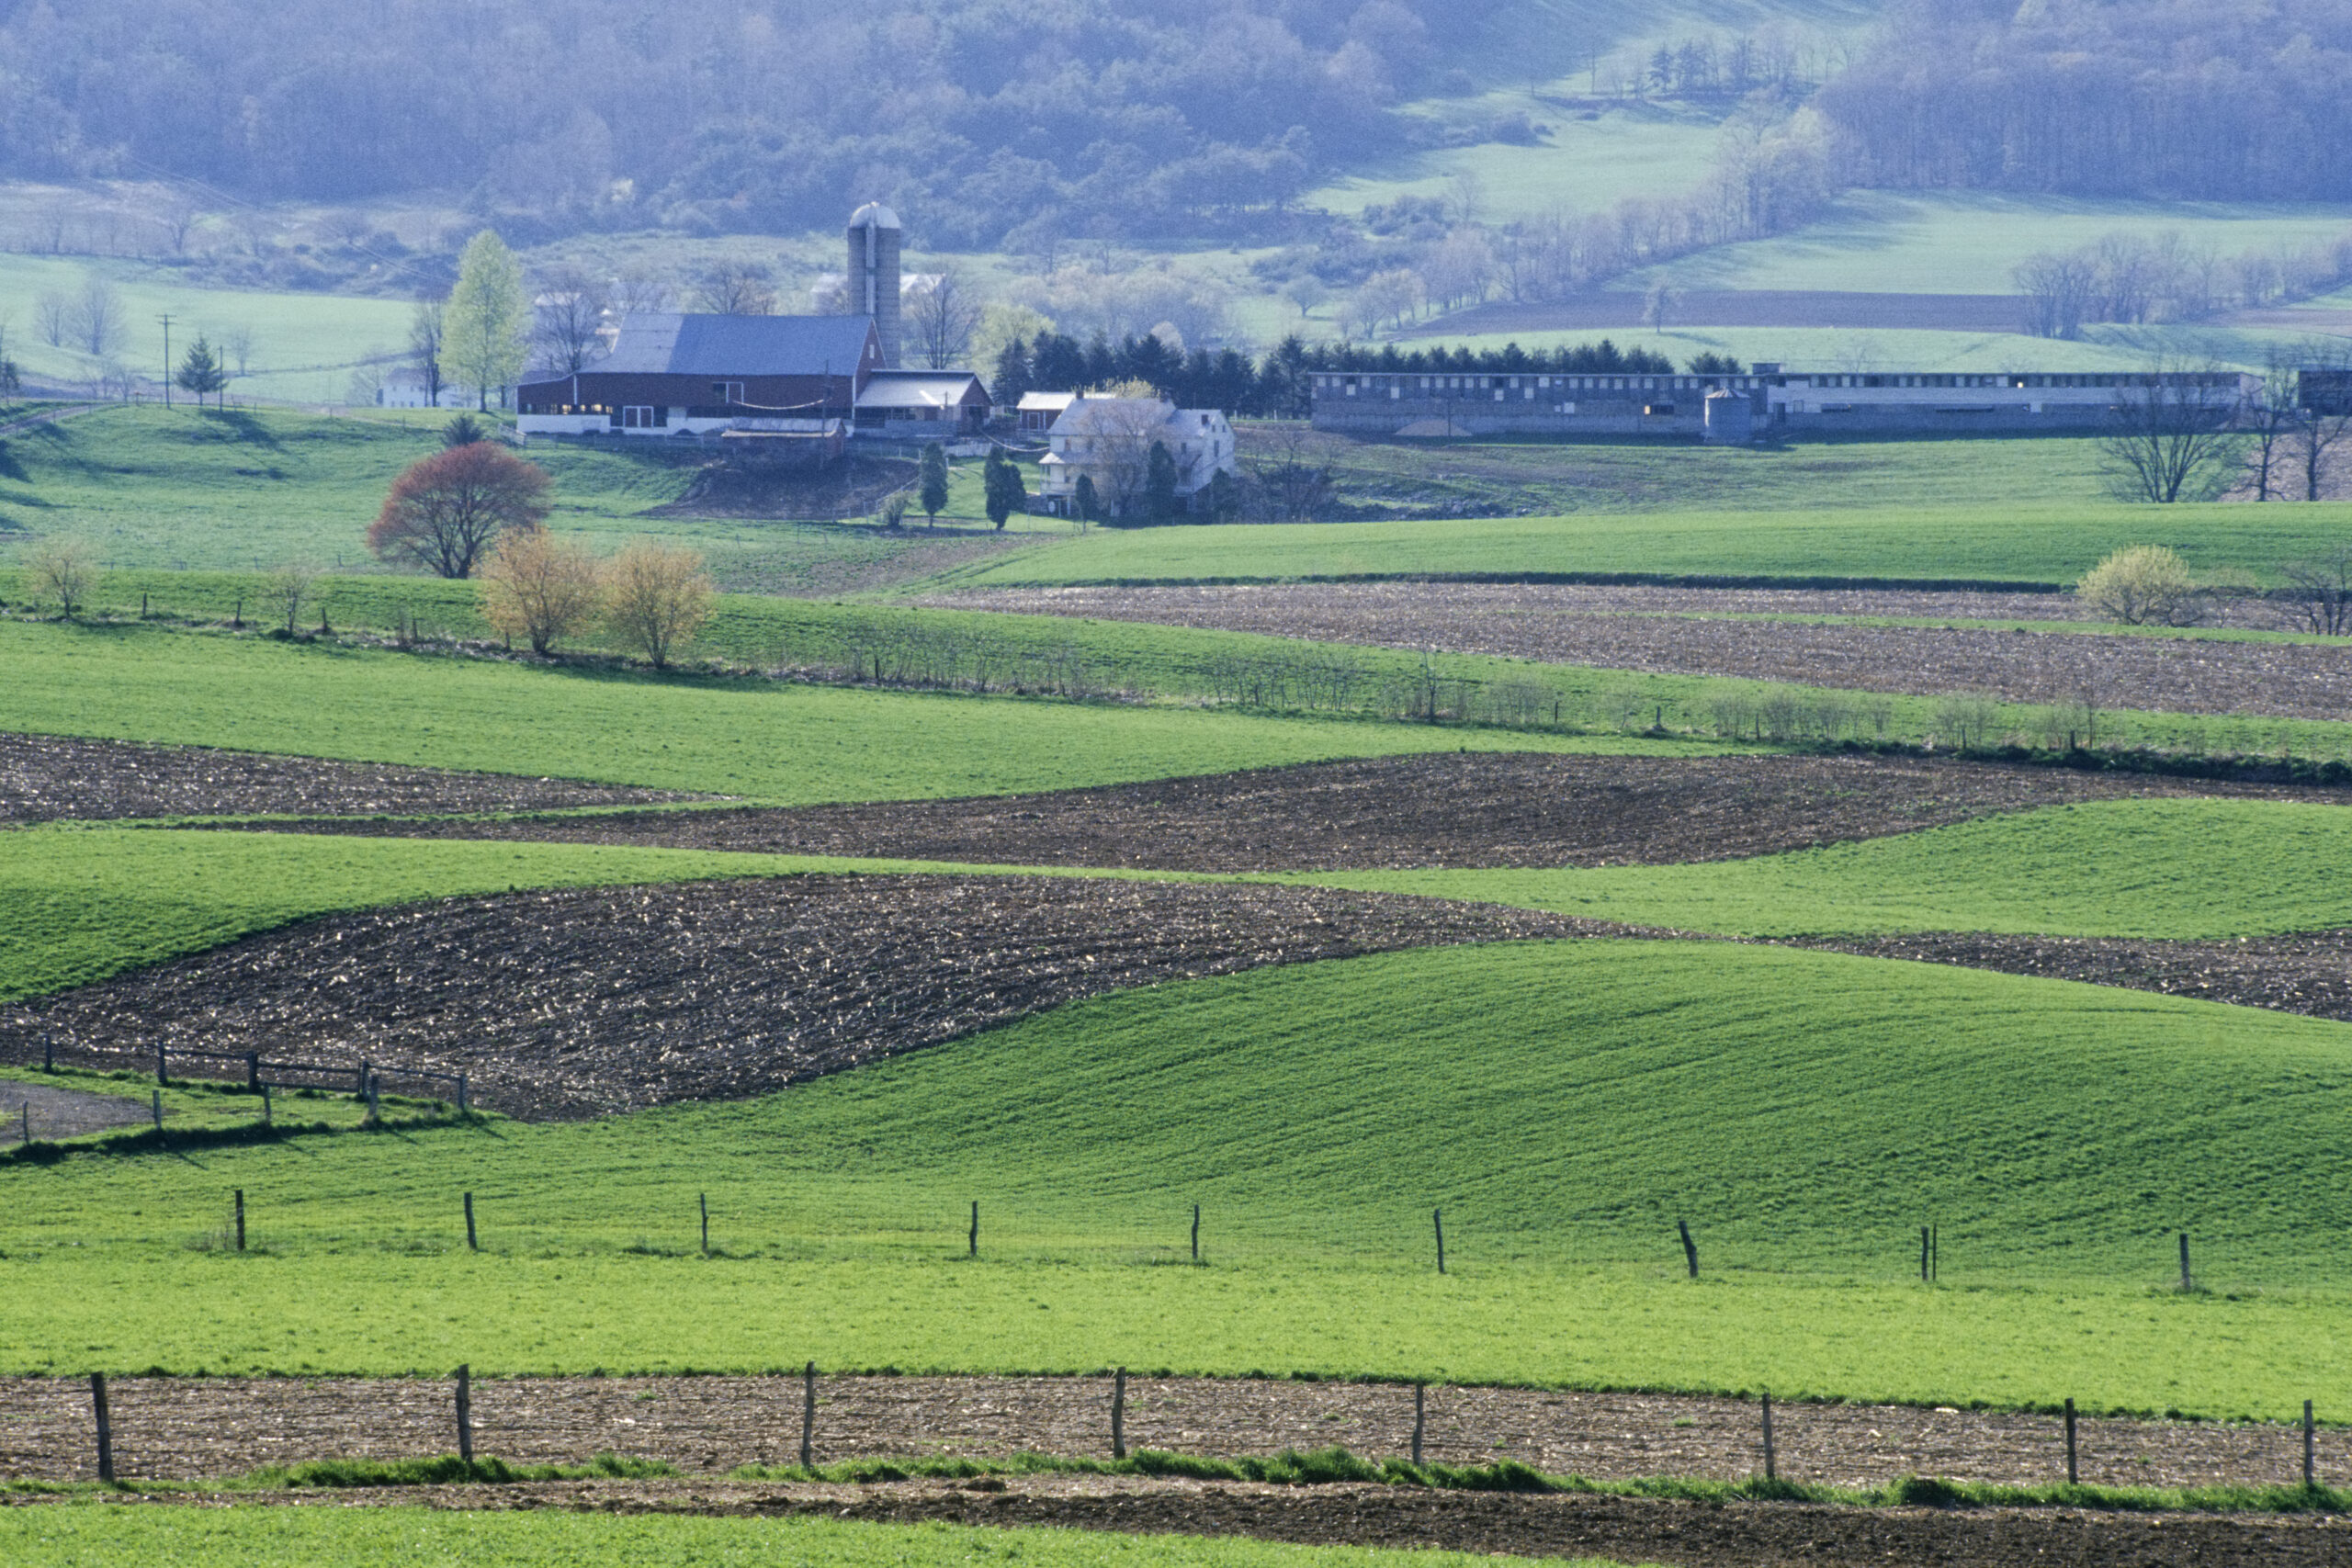 Amish farmland and countryside